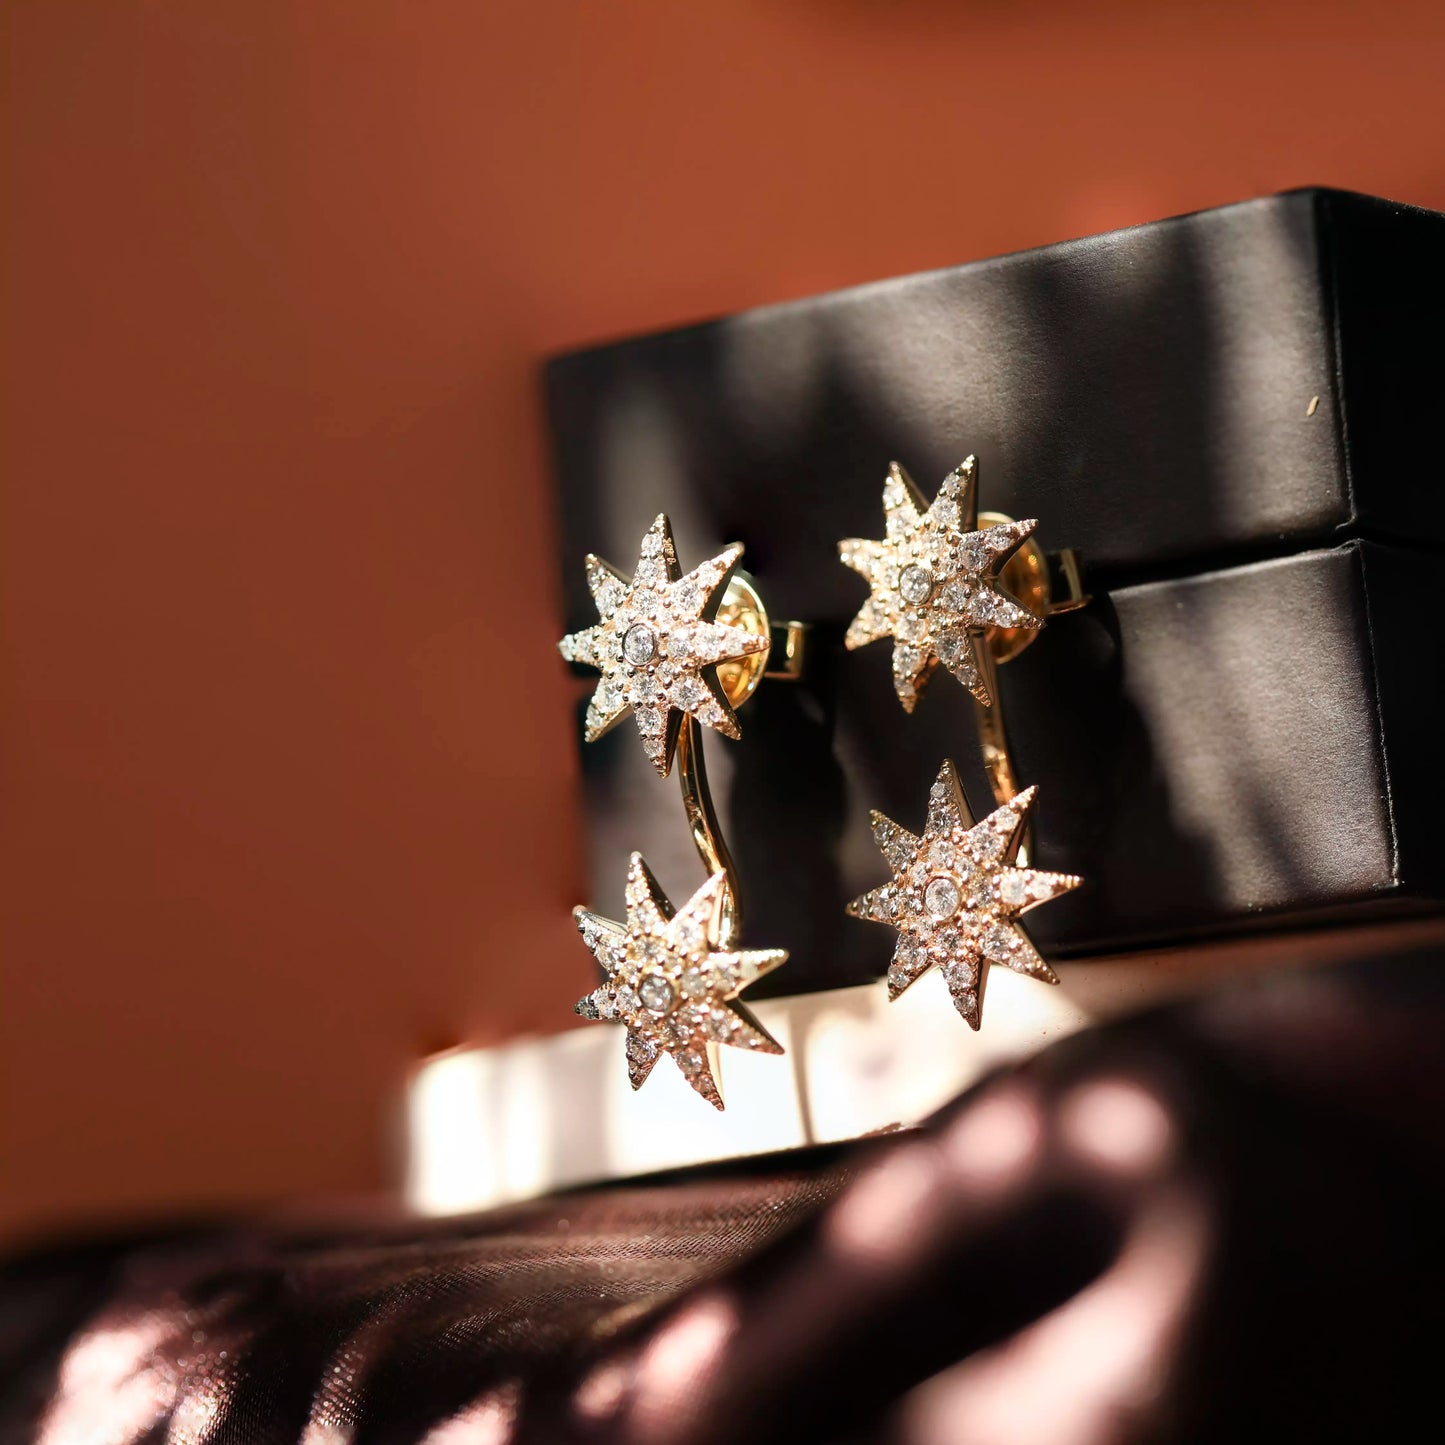 14K Gold 0.87 Ct. Genuine Diamond Starburst Jacket Earrings Fine Wedding Jewelry